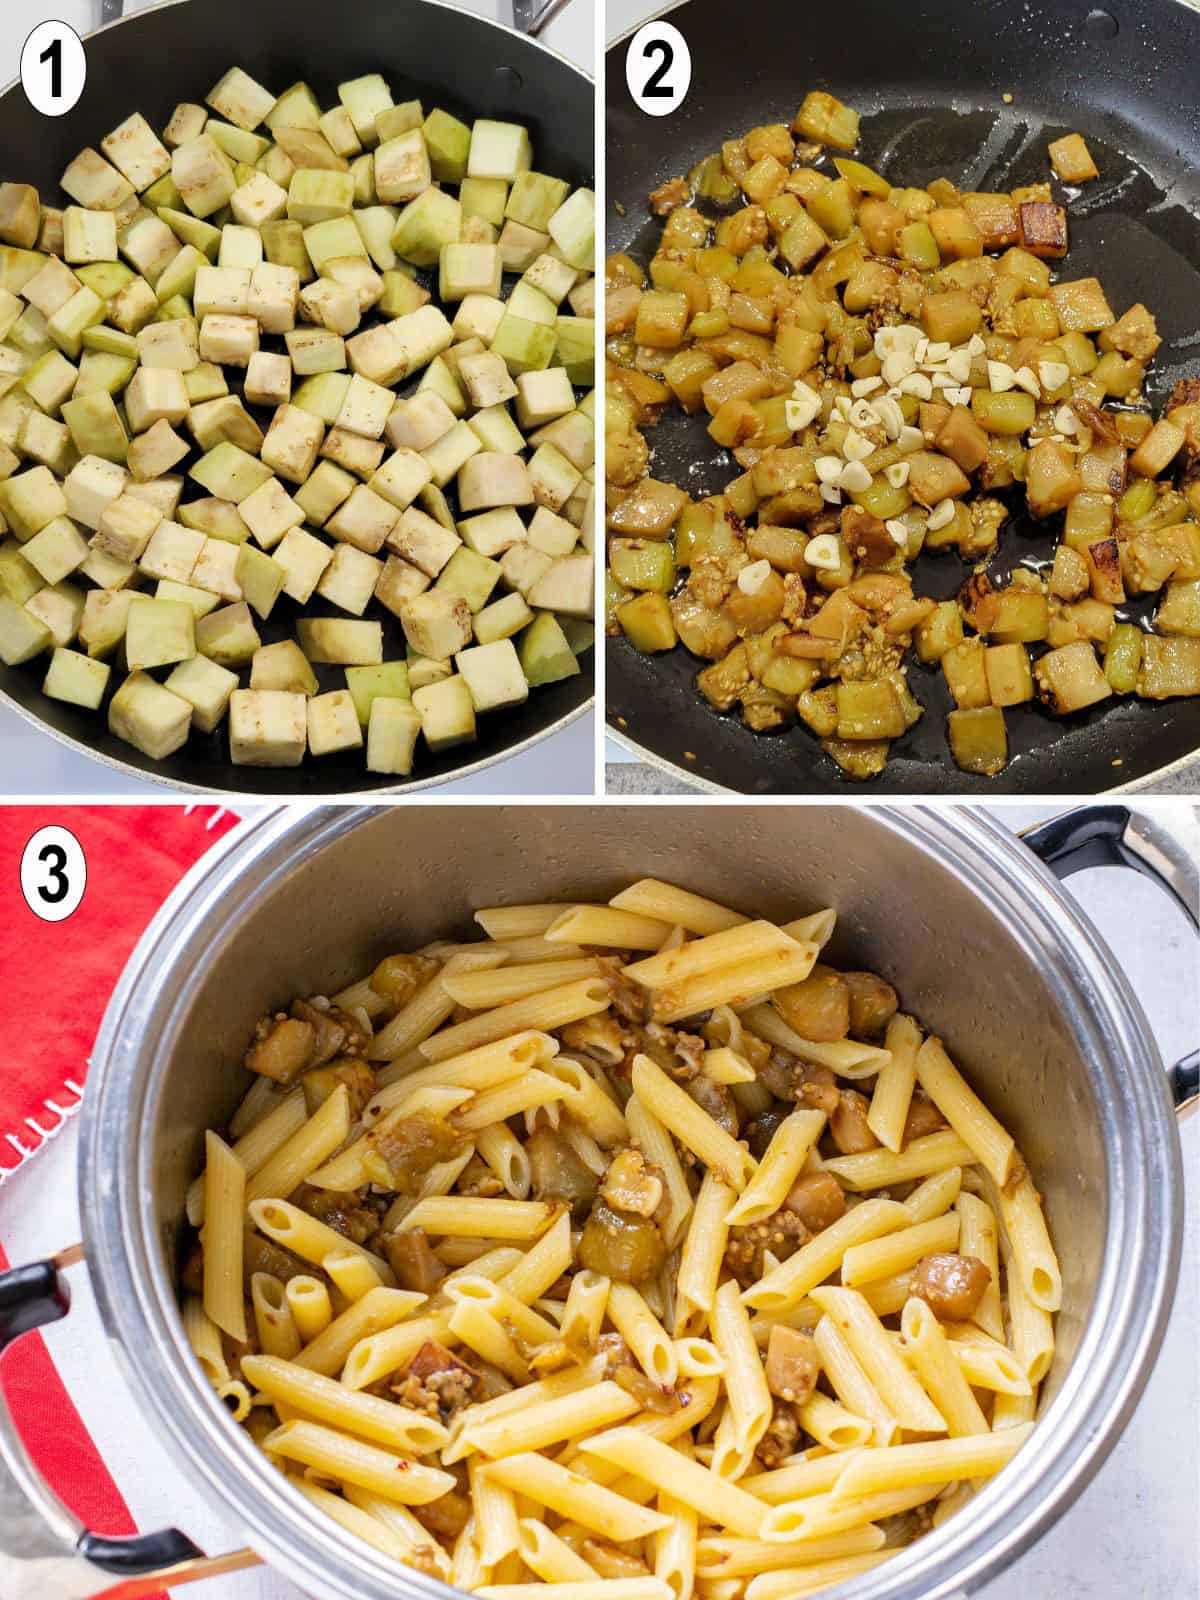 eggplant cubes sautéed and stirred into pasta.